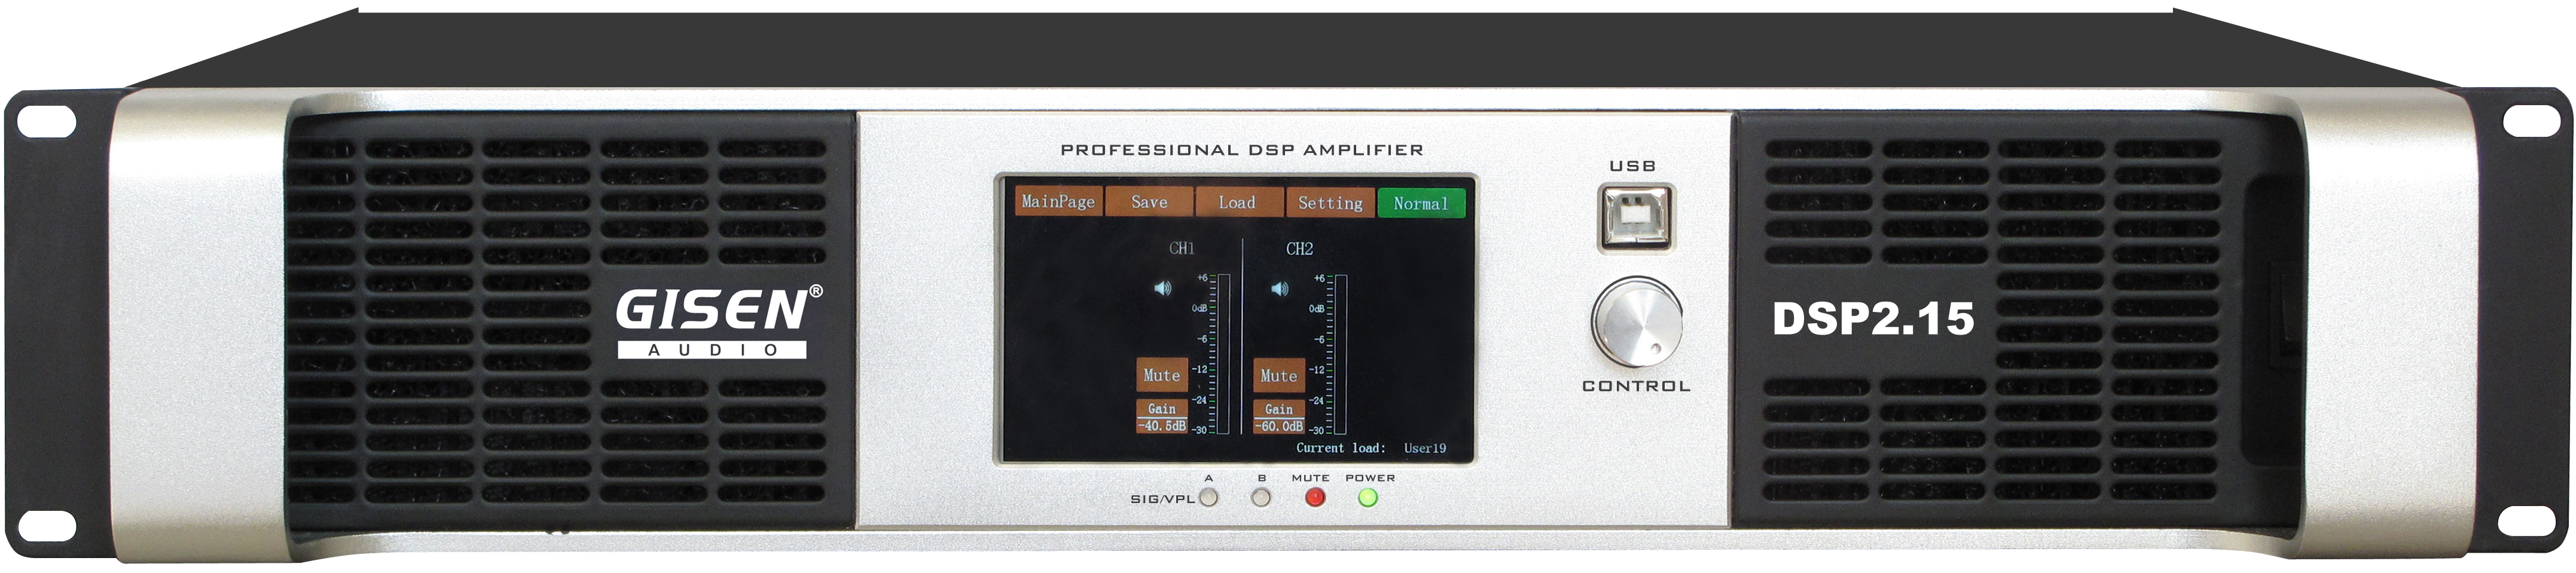 Verstärker DSP2.15 - GISEN Audio B-Ware